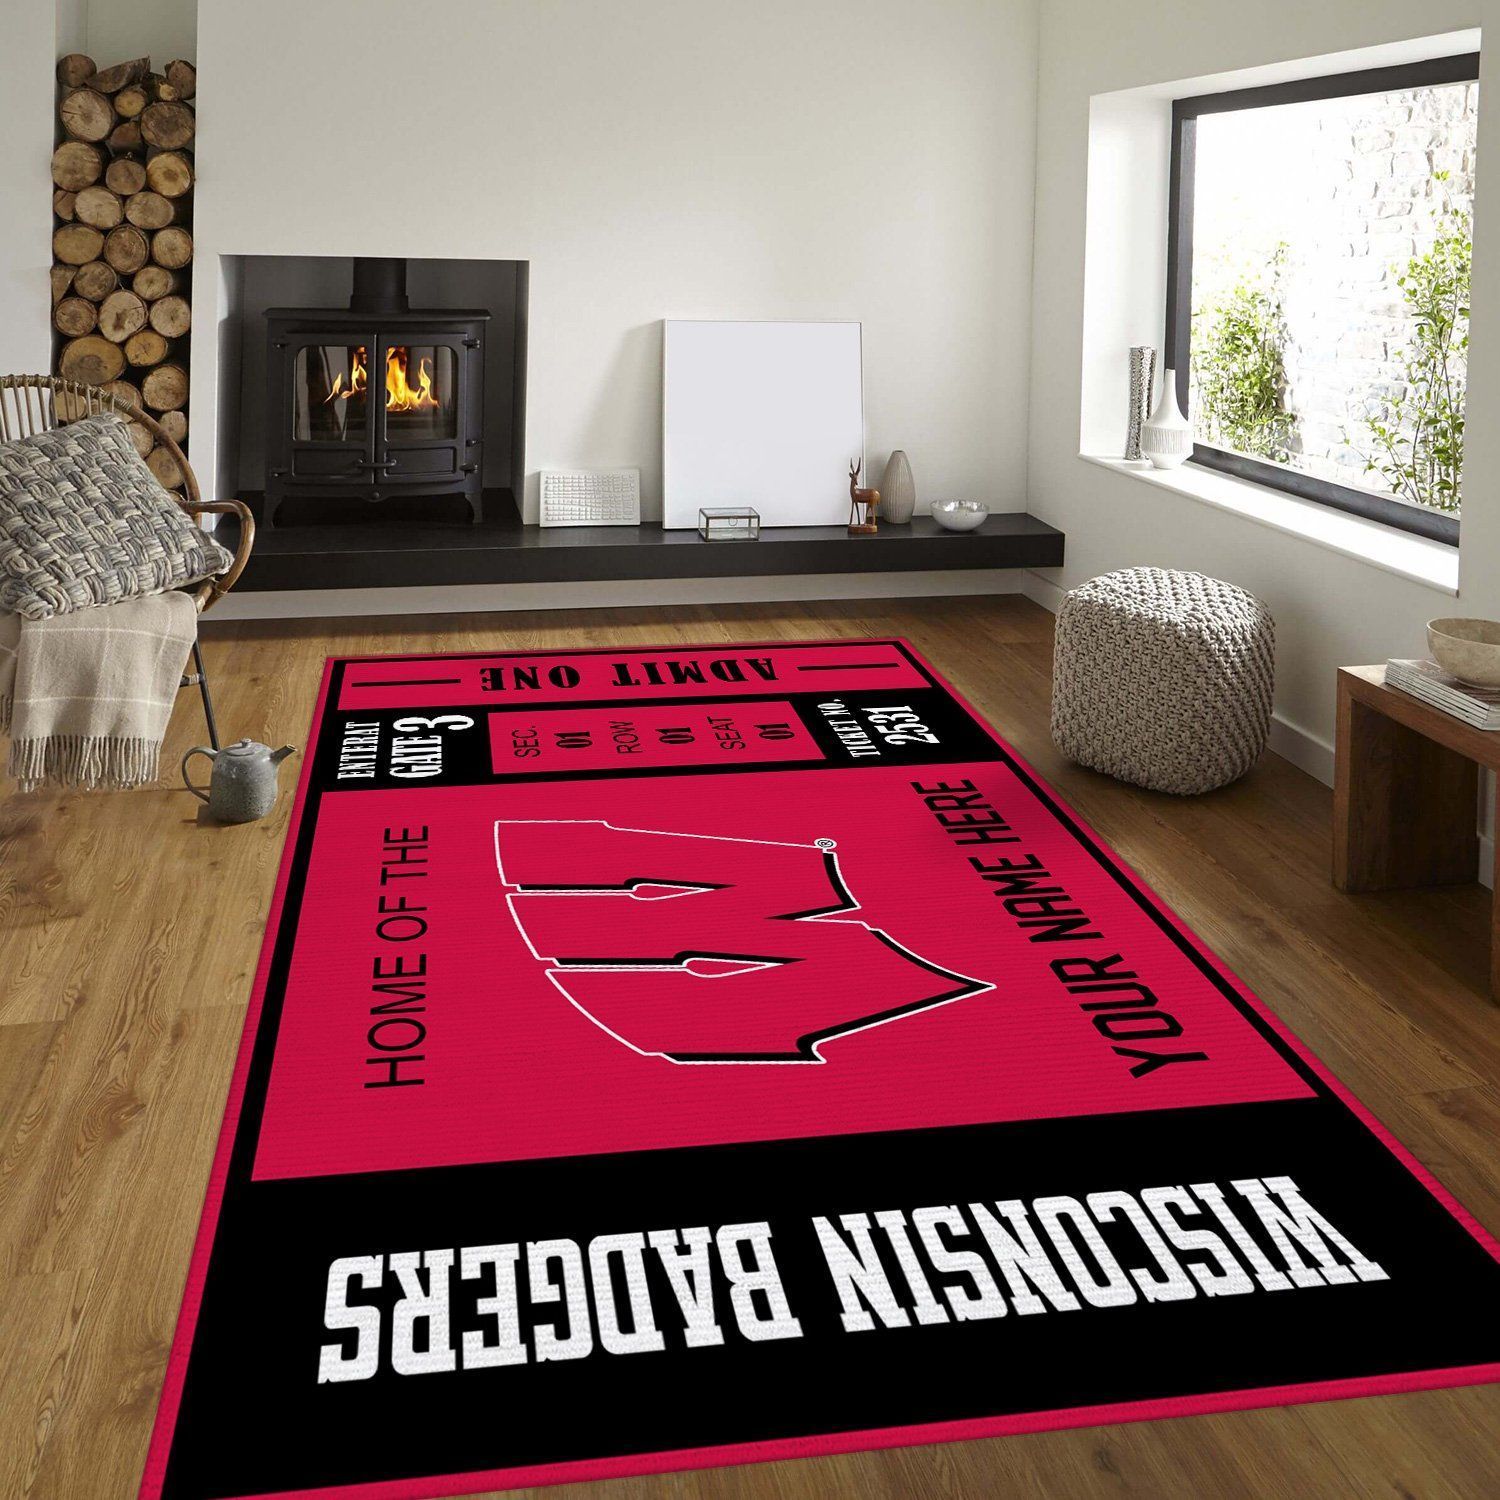 Wisconsin Badgers Ncaa Customizable Rug, Living Room Rug - Home Decor Floor Decor - Indoor Outdoor Rugs 1